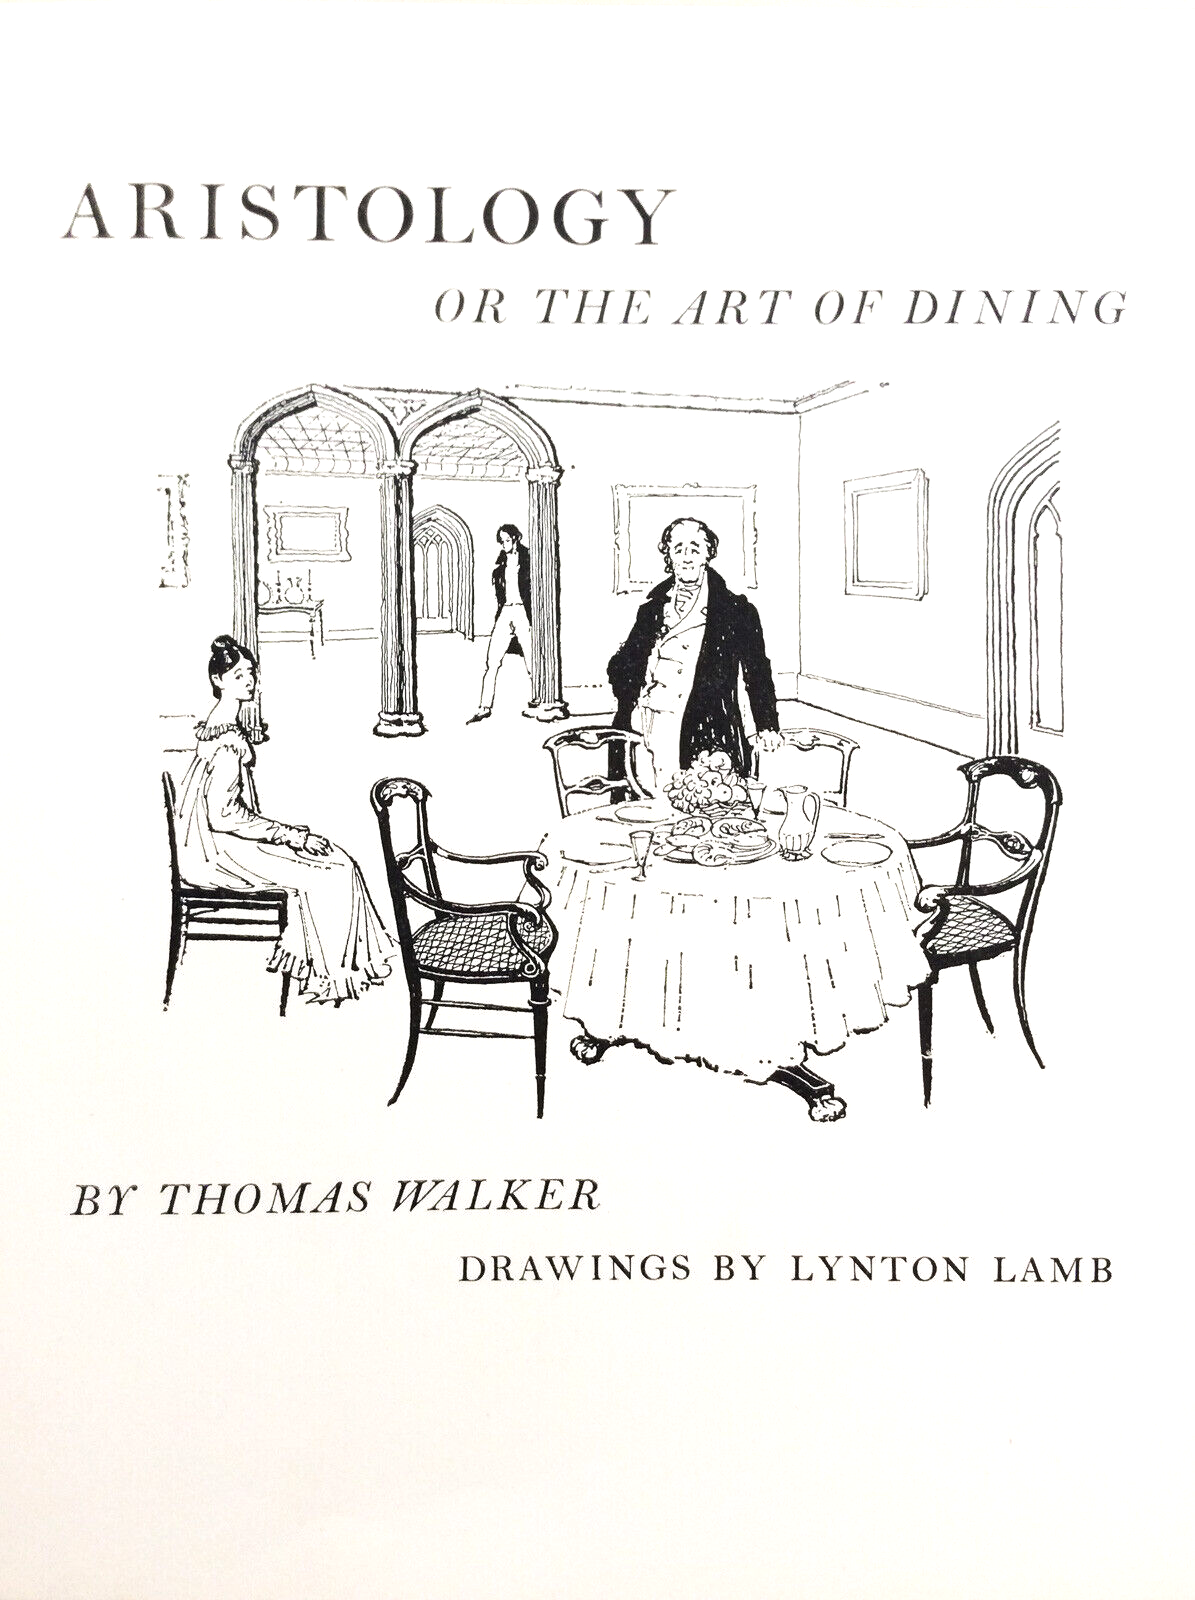 Victorian Book on the Art of Dining "Aristology" Cambridge Reprint 1965 Ltd Ed 500